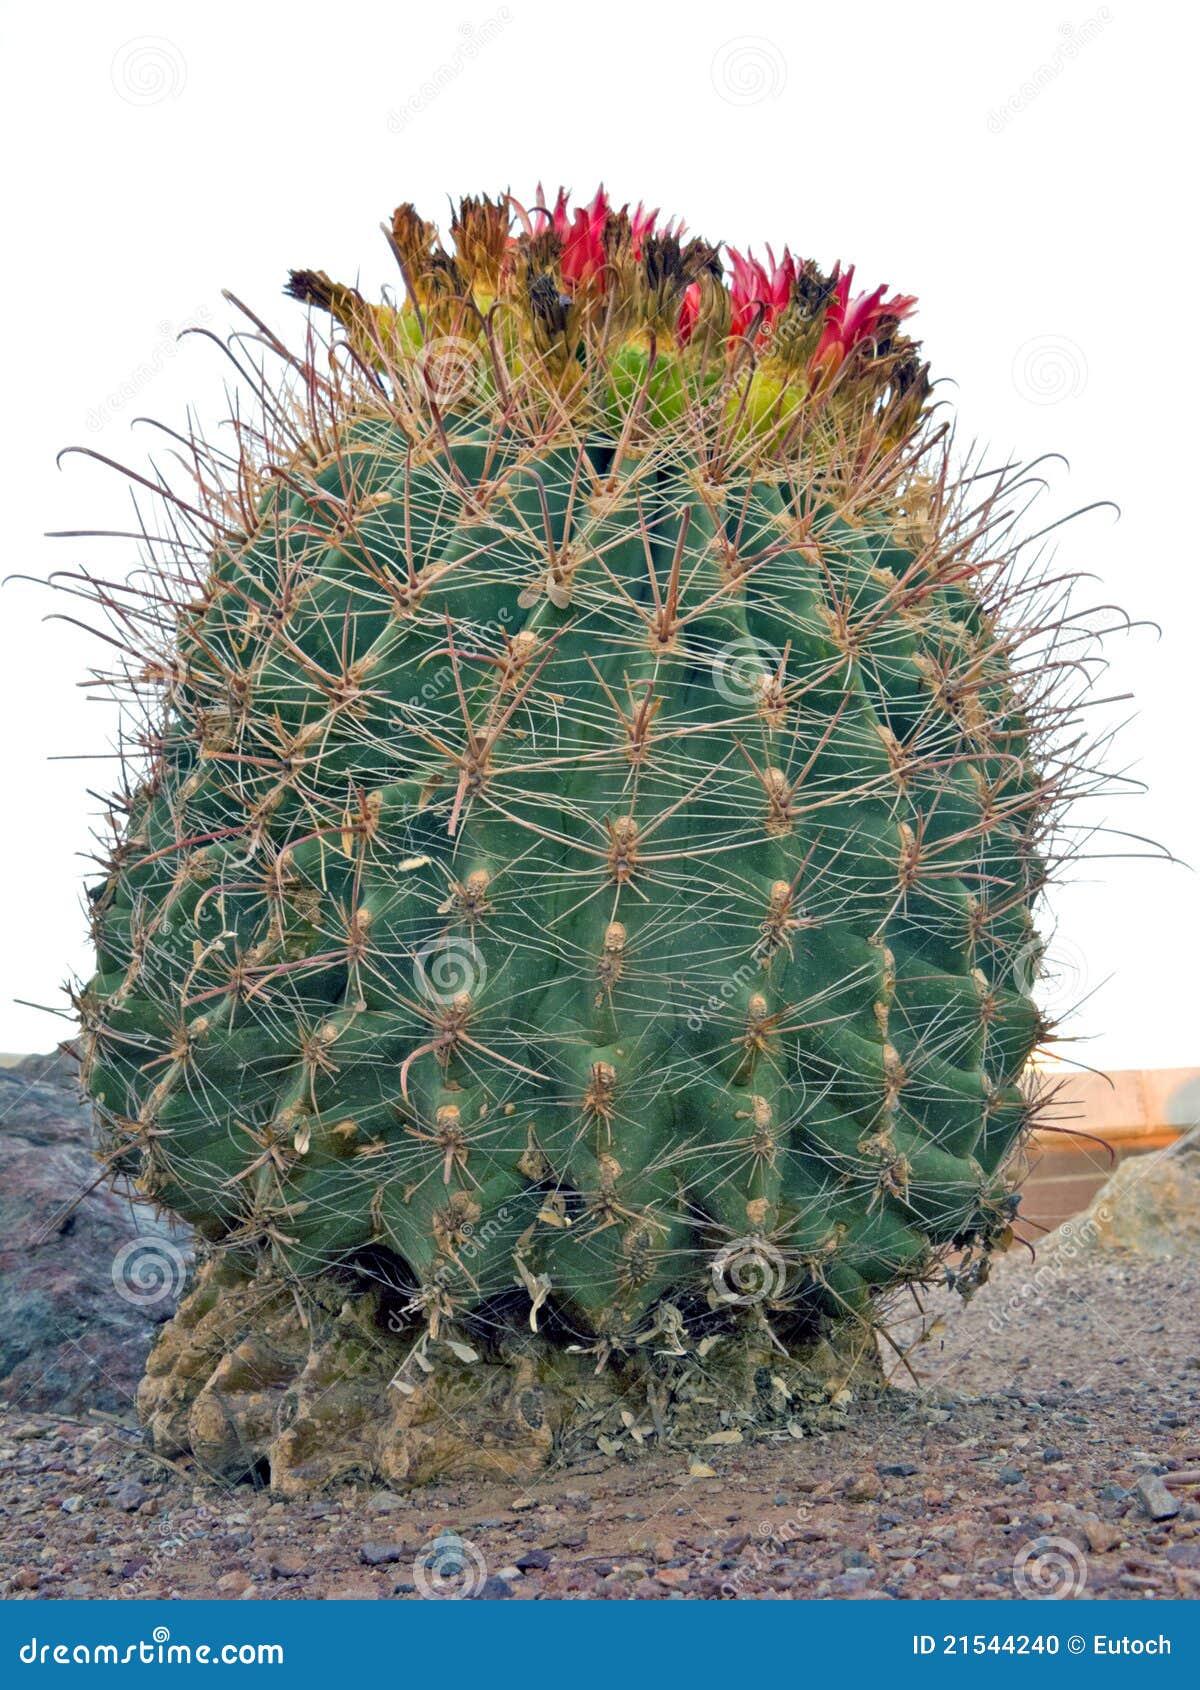 396 Fishhook Cactus Stock Photos - Free & Royalty-Free Stock